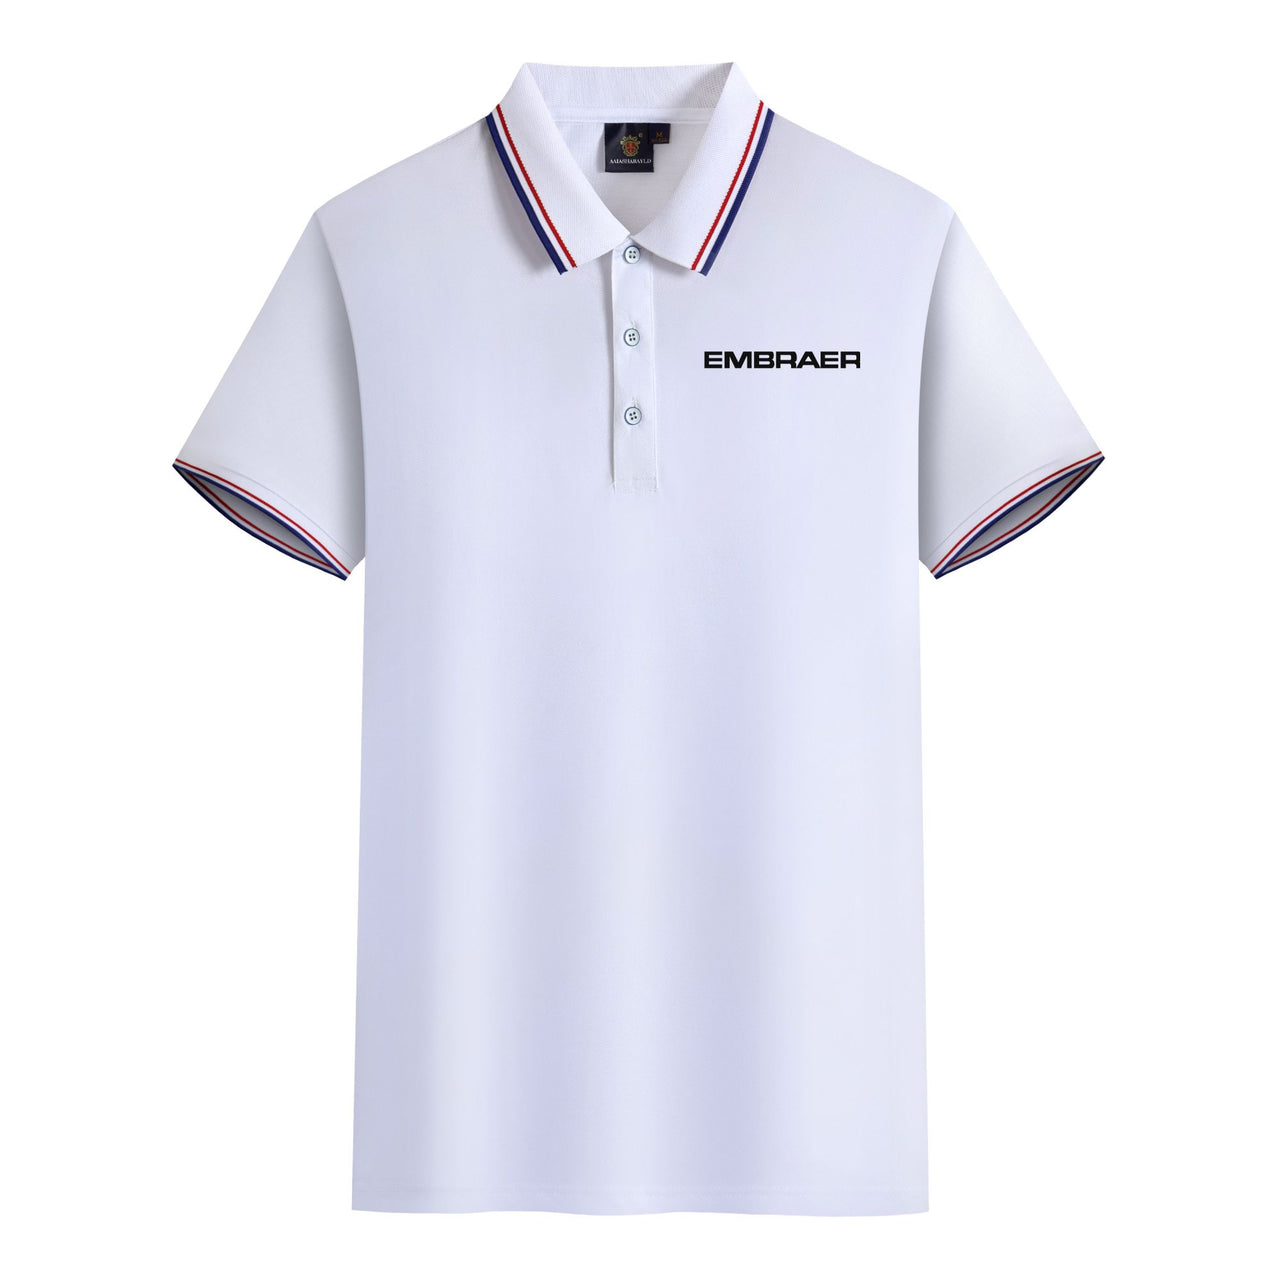 Embraer & Text Designed Stylish Polo T-Shirts